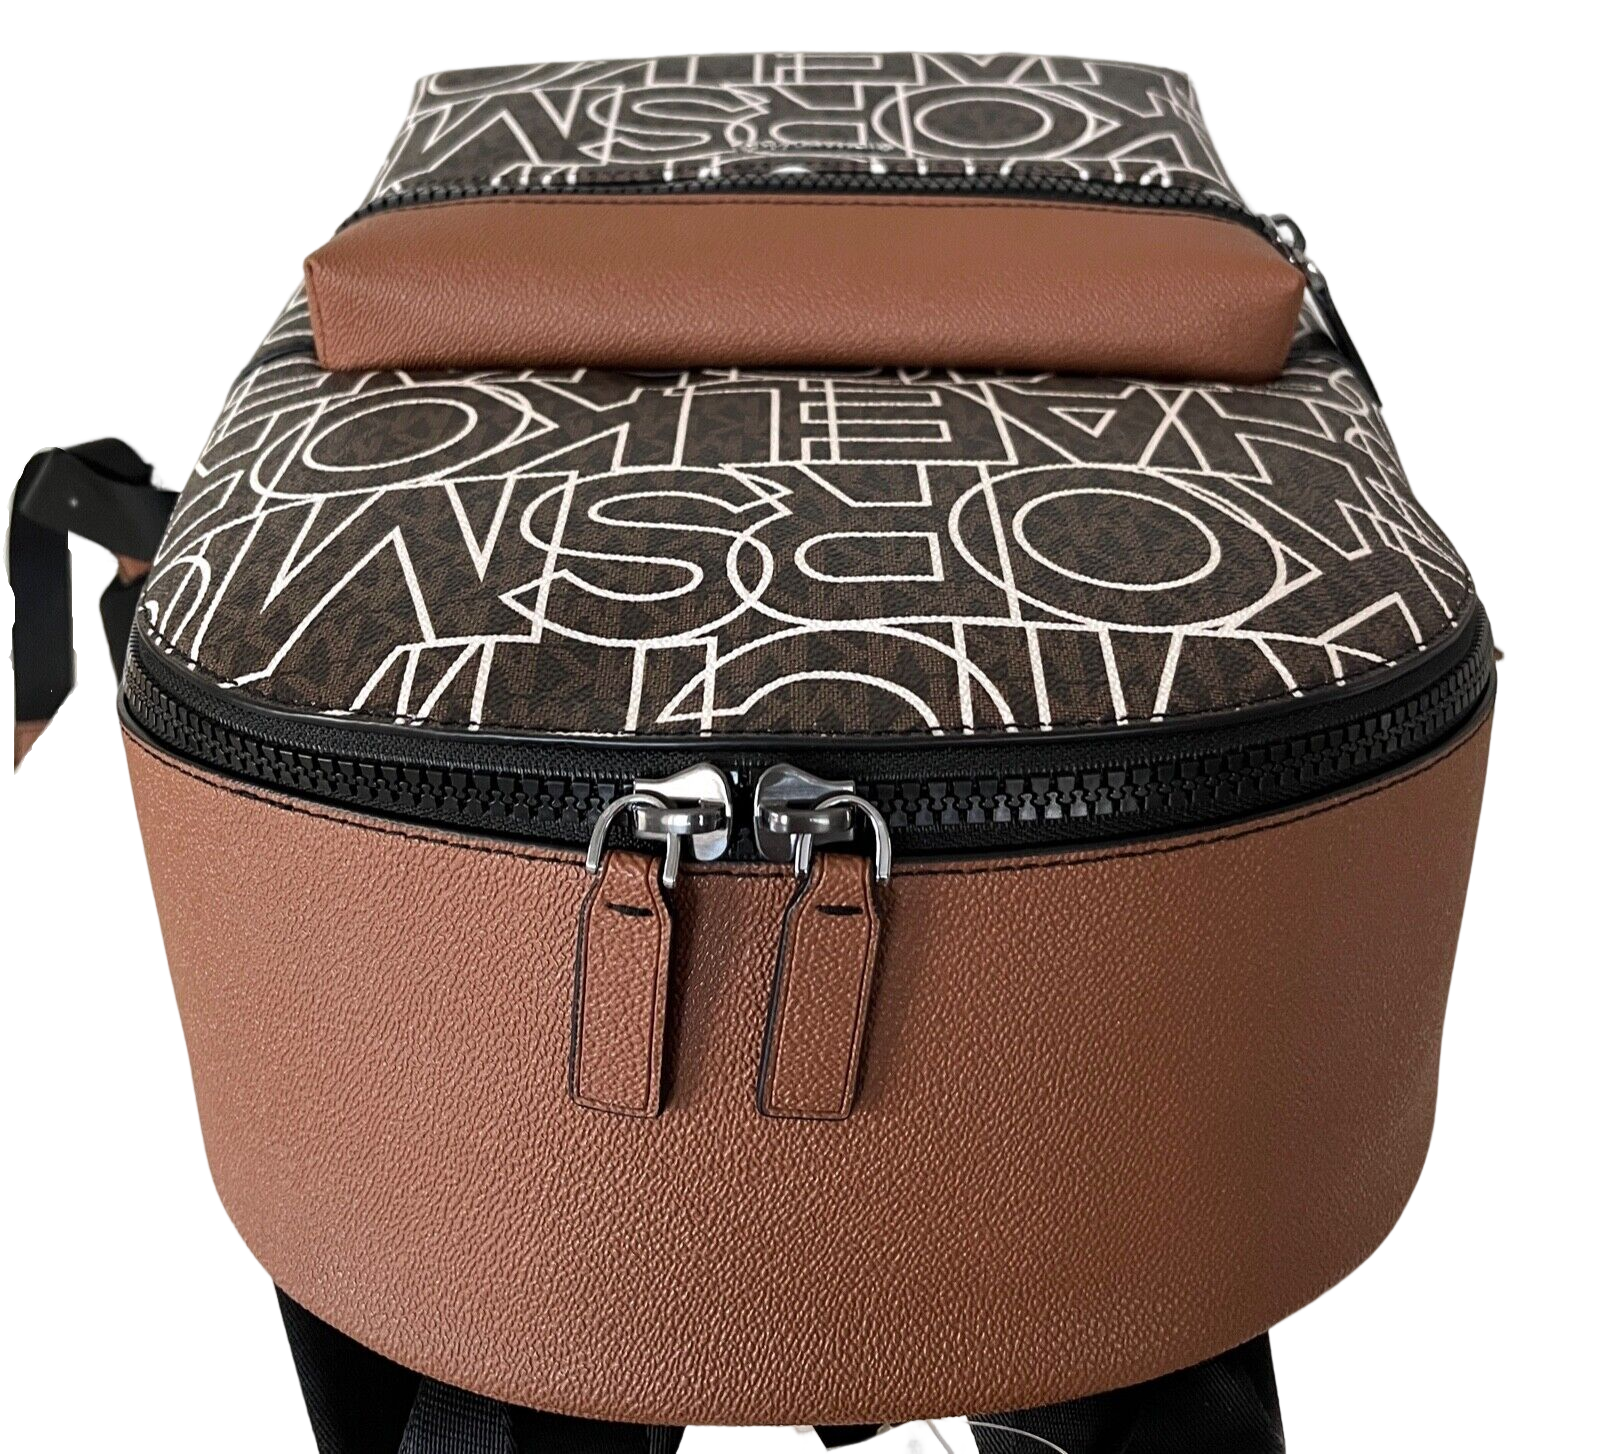 Michael Kors Men's Cooper Large MK Multi Leather Backpack Bag